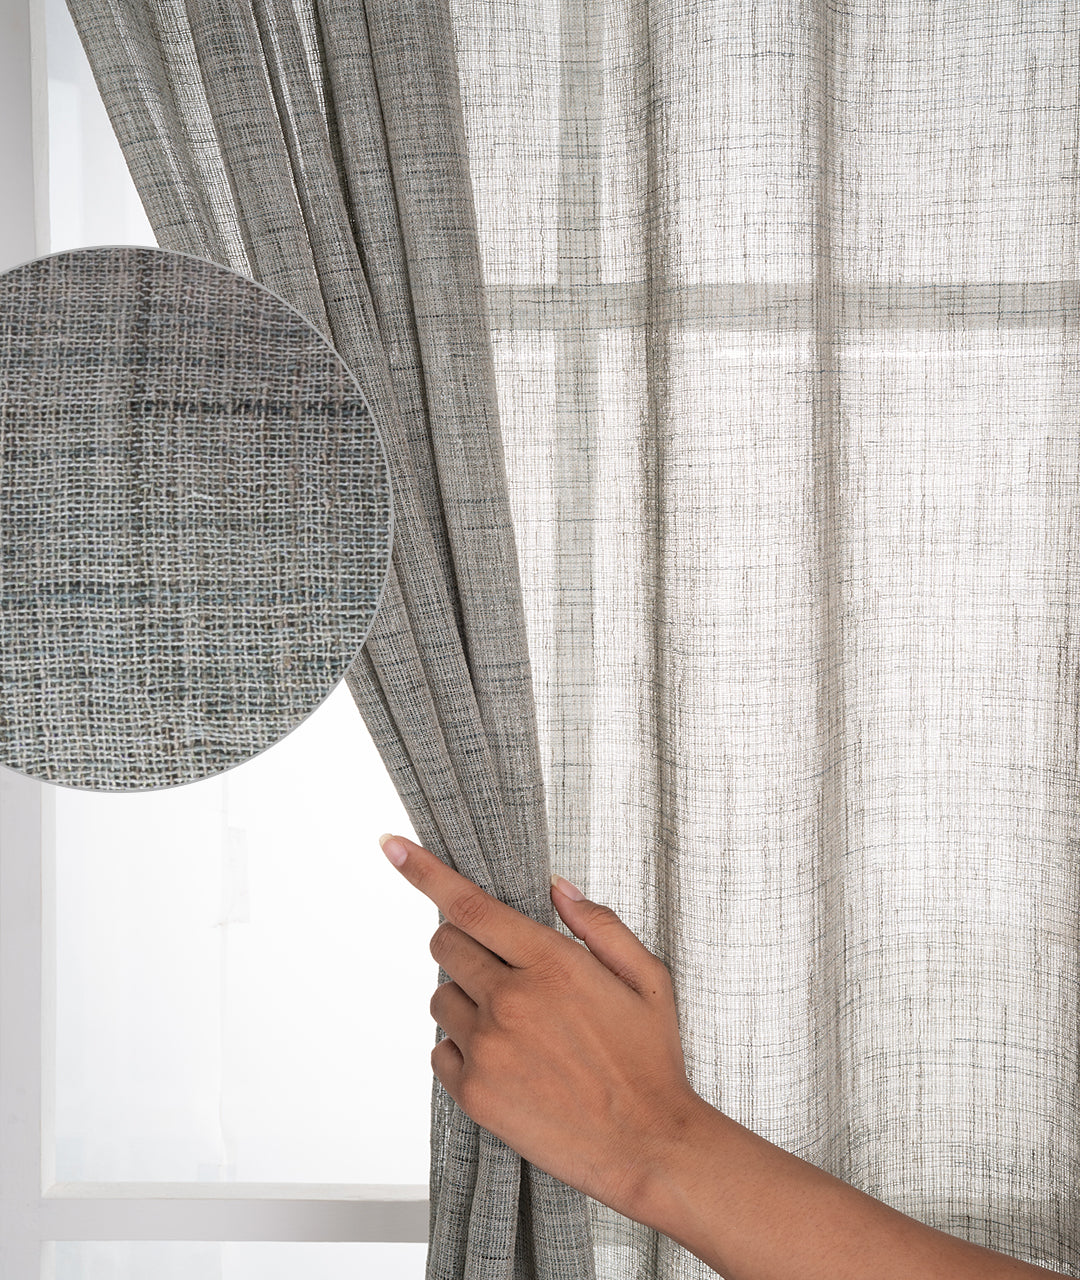 Sage Green Jute Textured Curtain | Set of 2 Panels